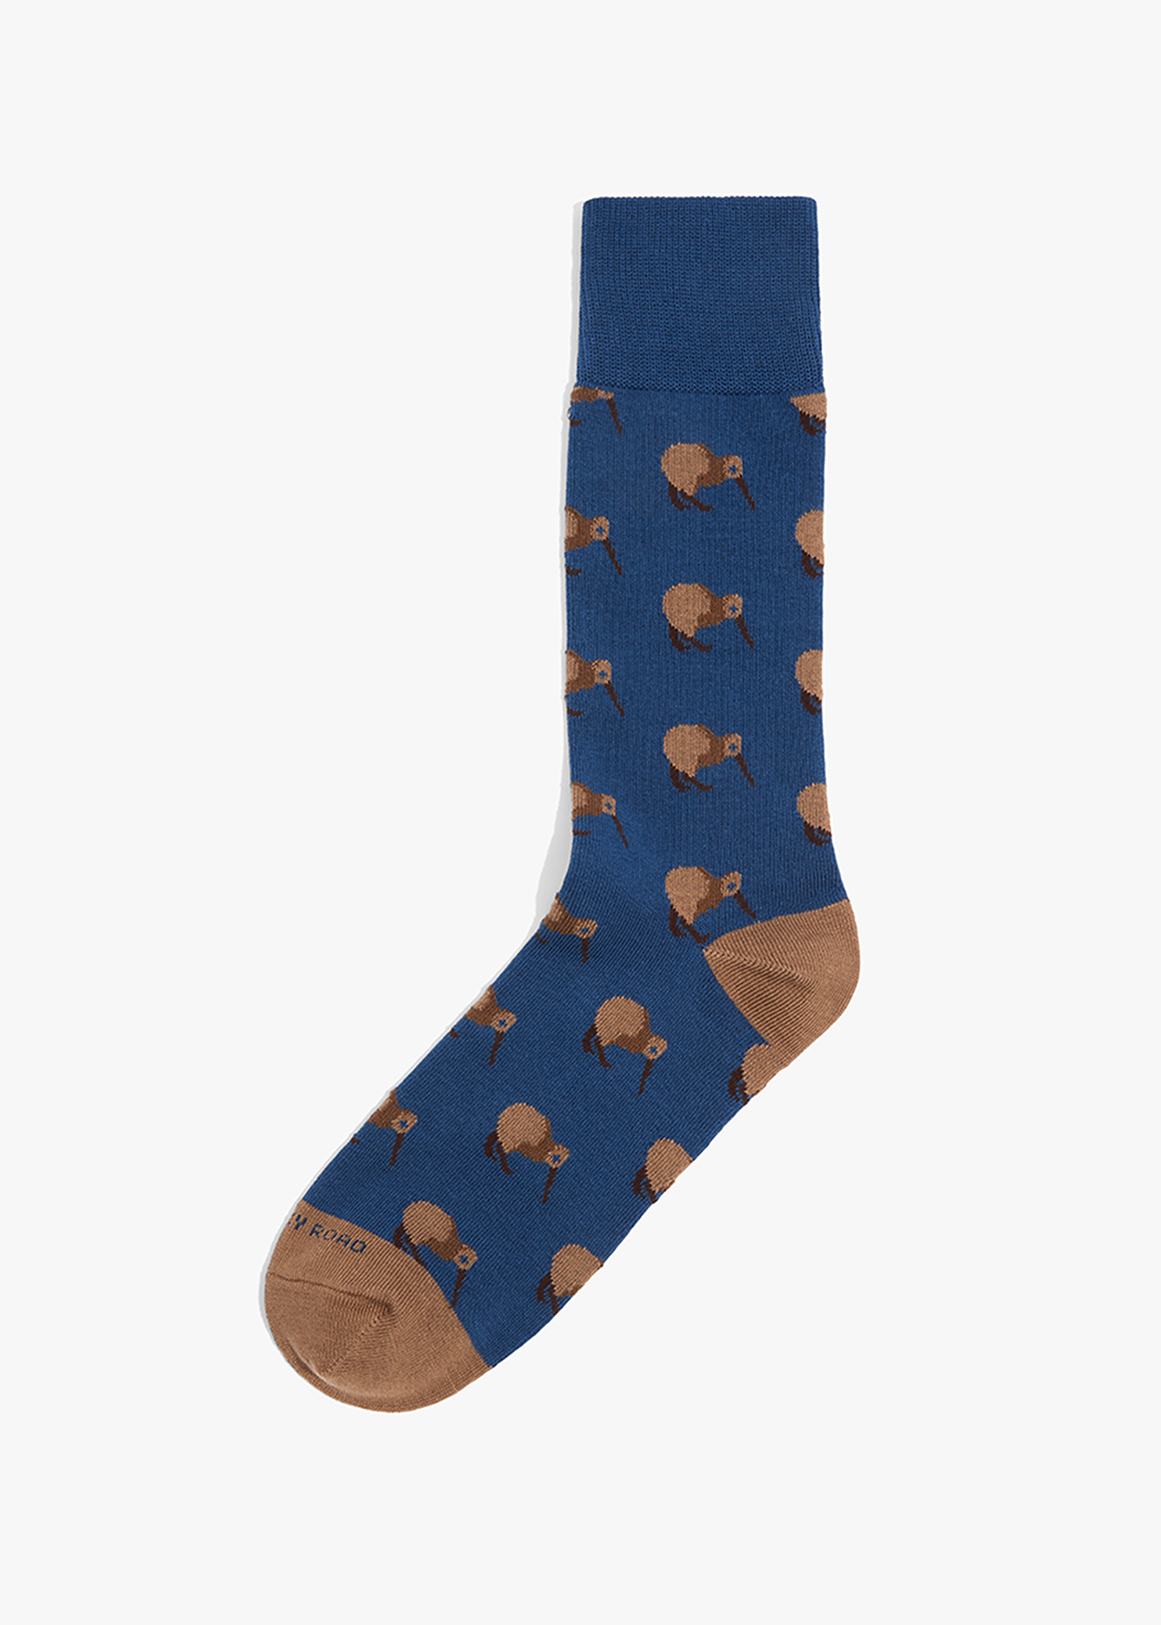 Australian Cotton Kiwi Sock | Woolworths.co.za